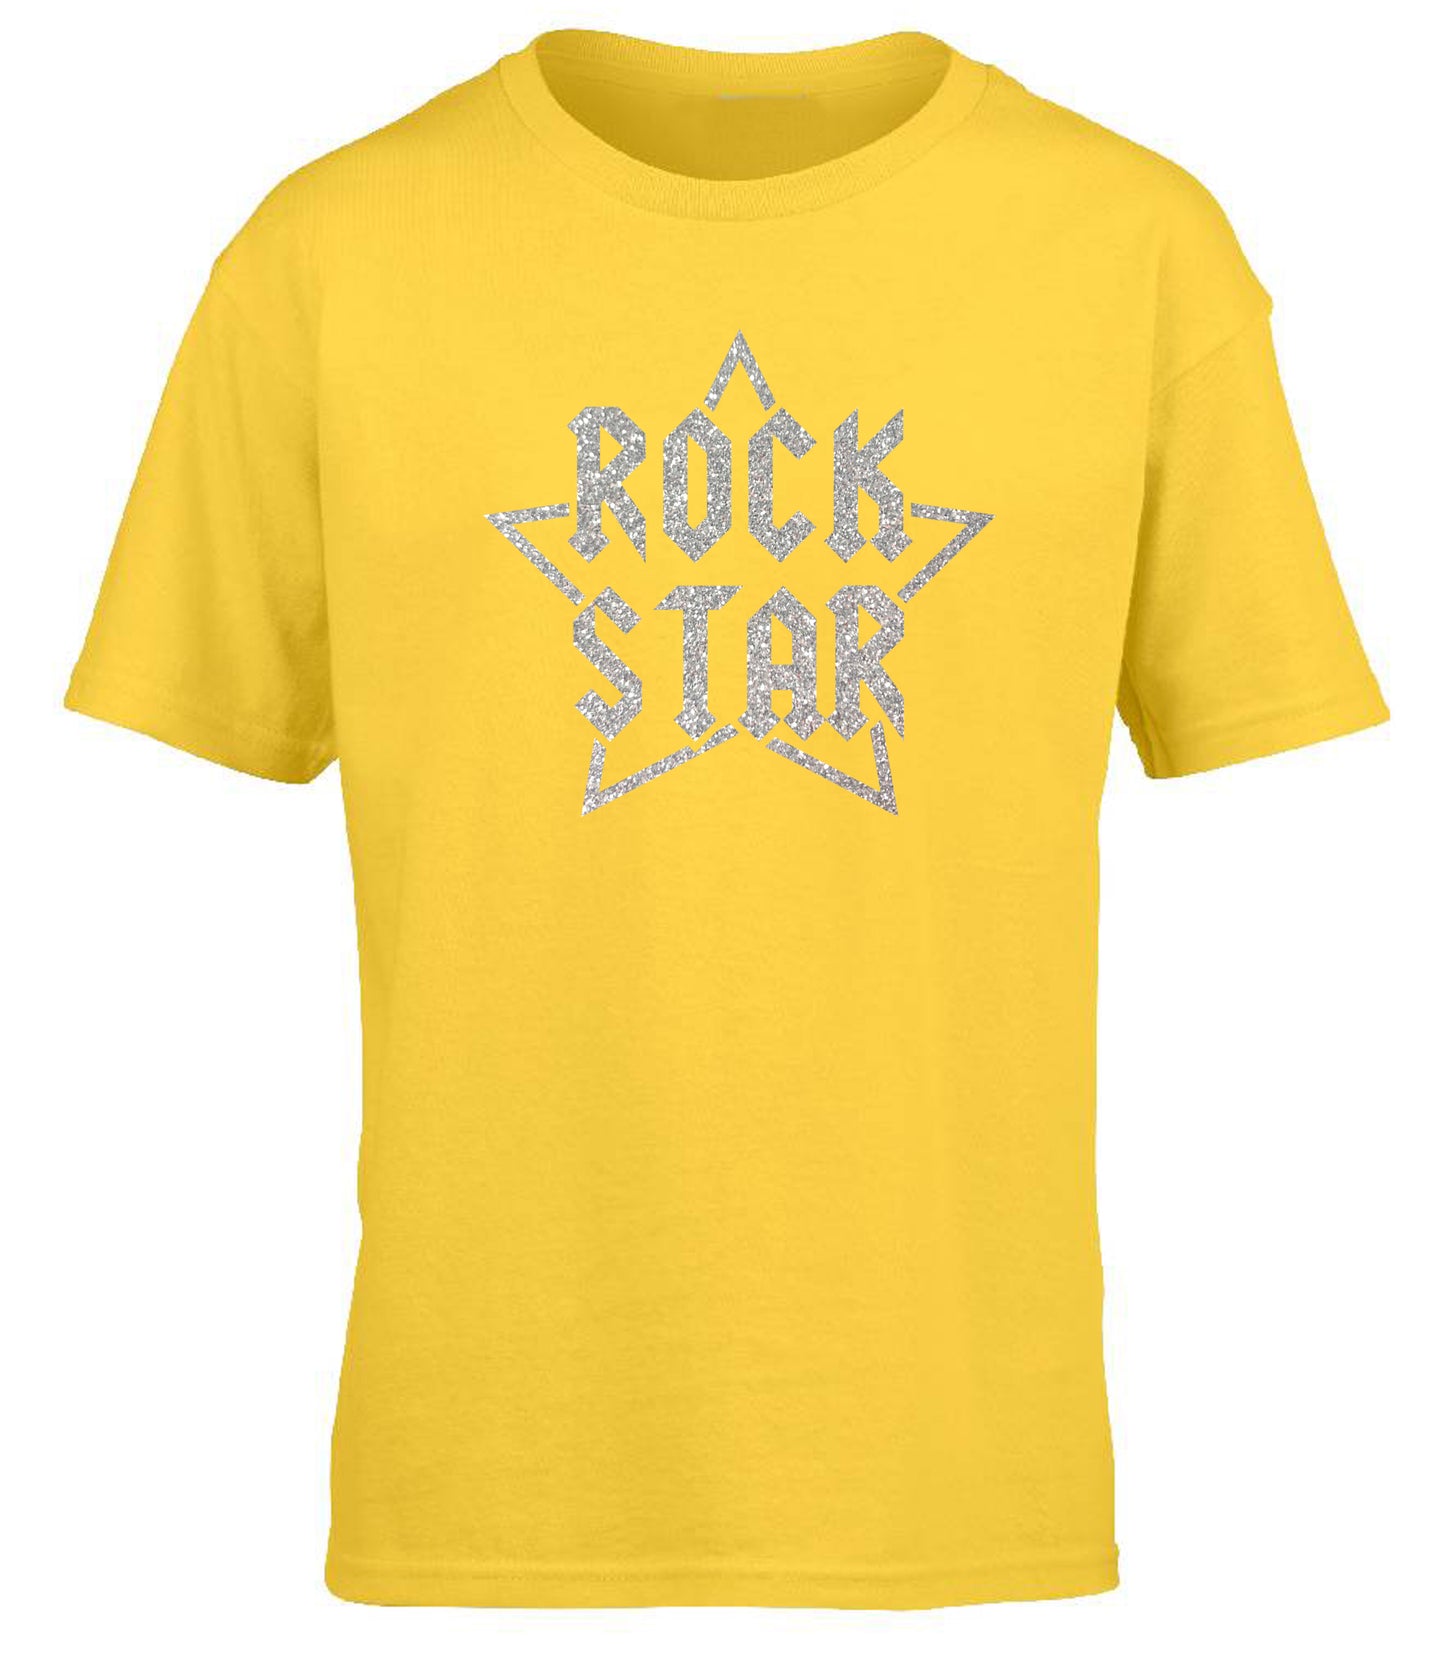 Rock star - Glitter children's T-shirt